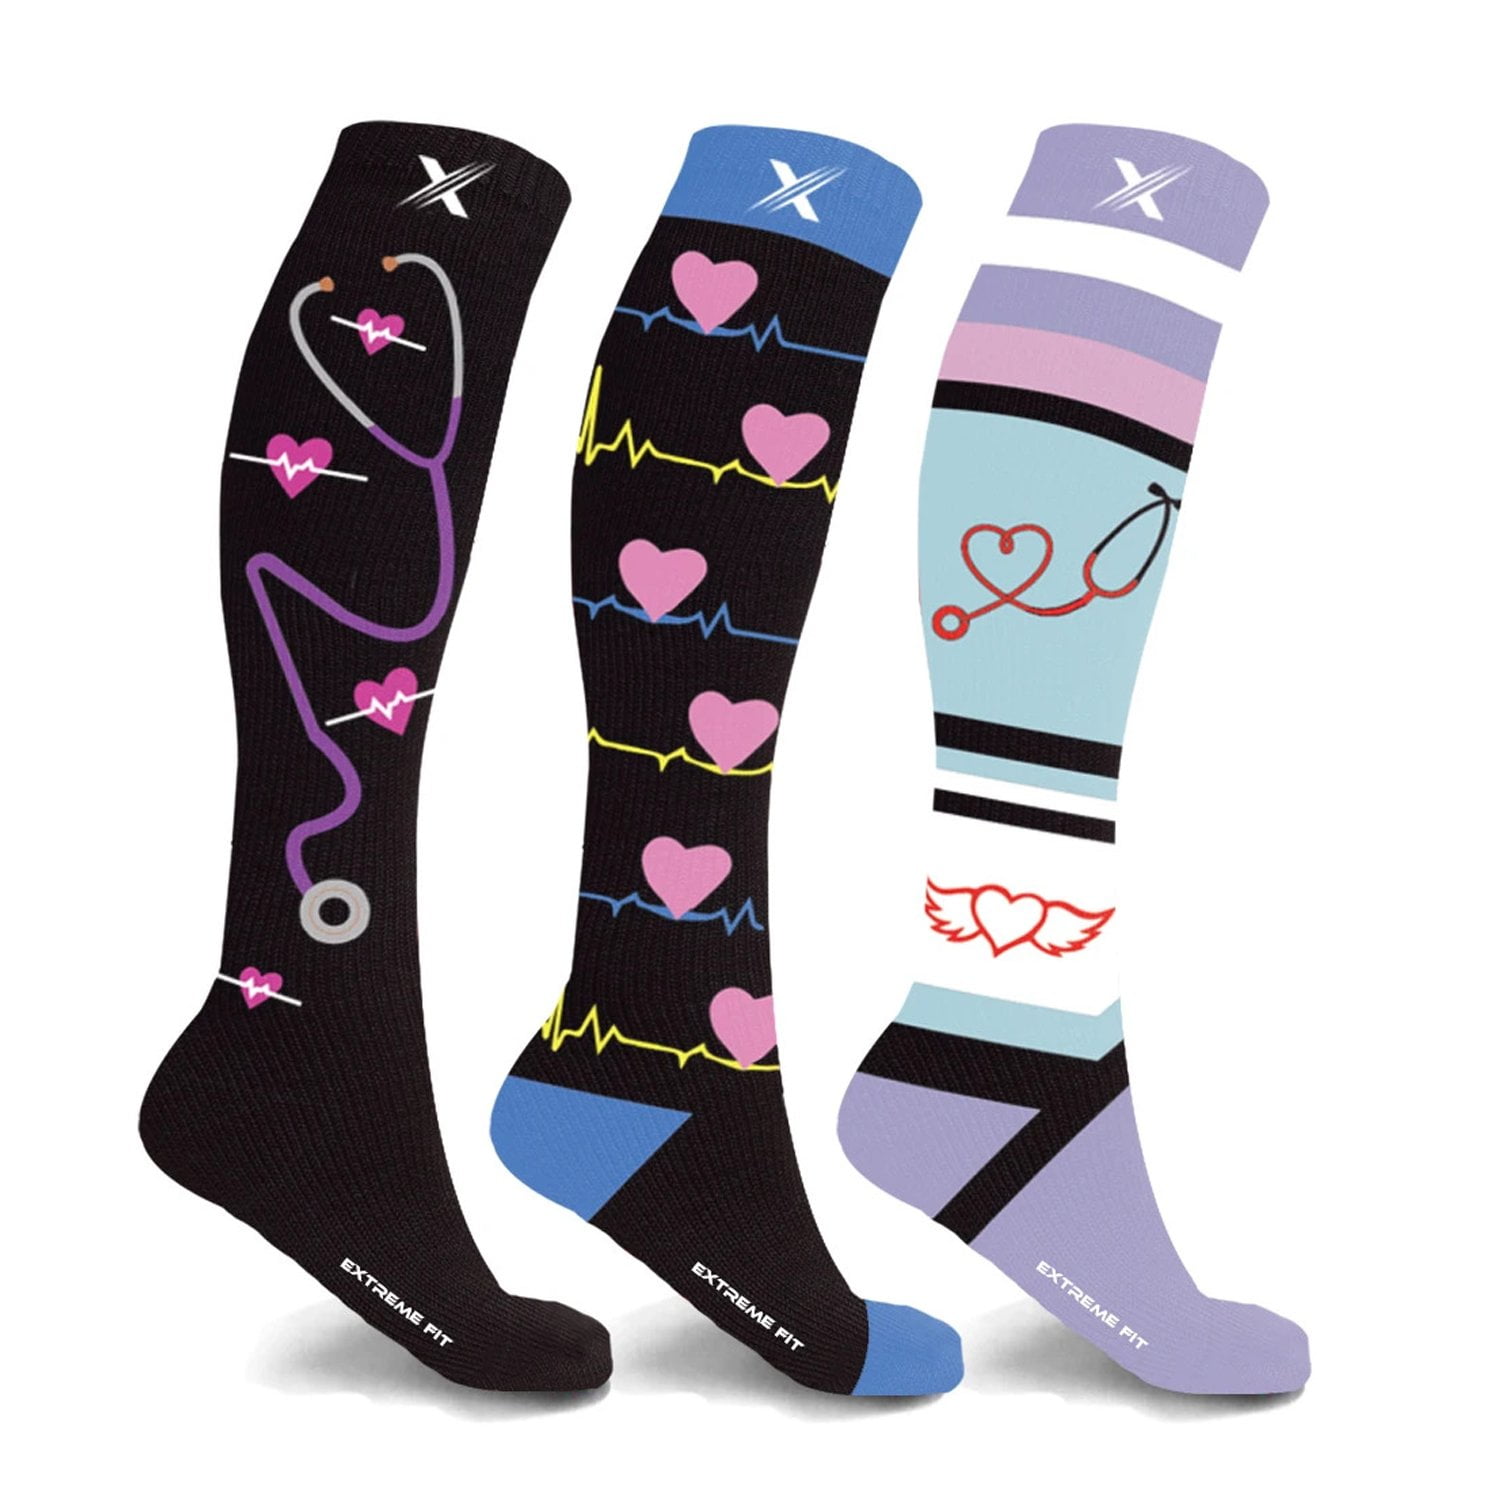 Extreme Fit Knee High Women's Compression Socks -Medical Designs, 3 ...